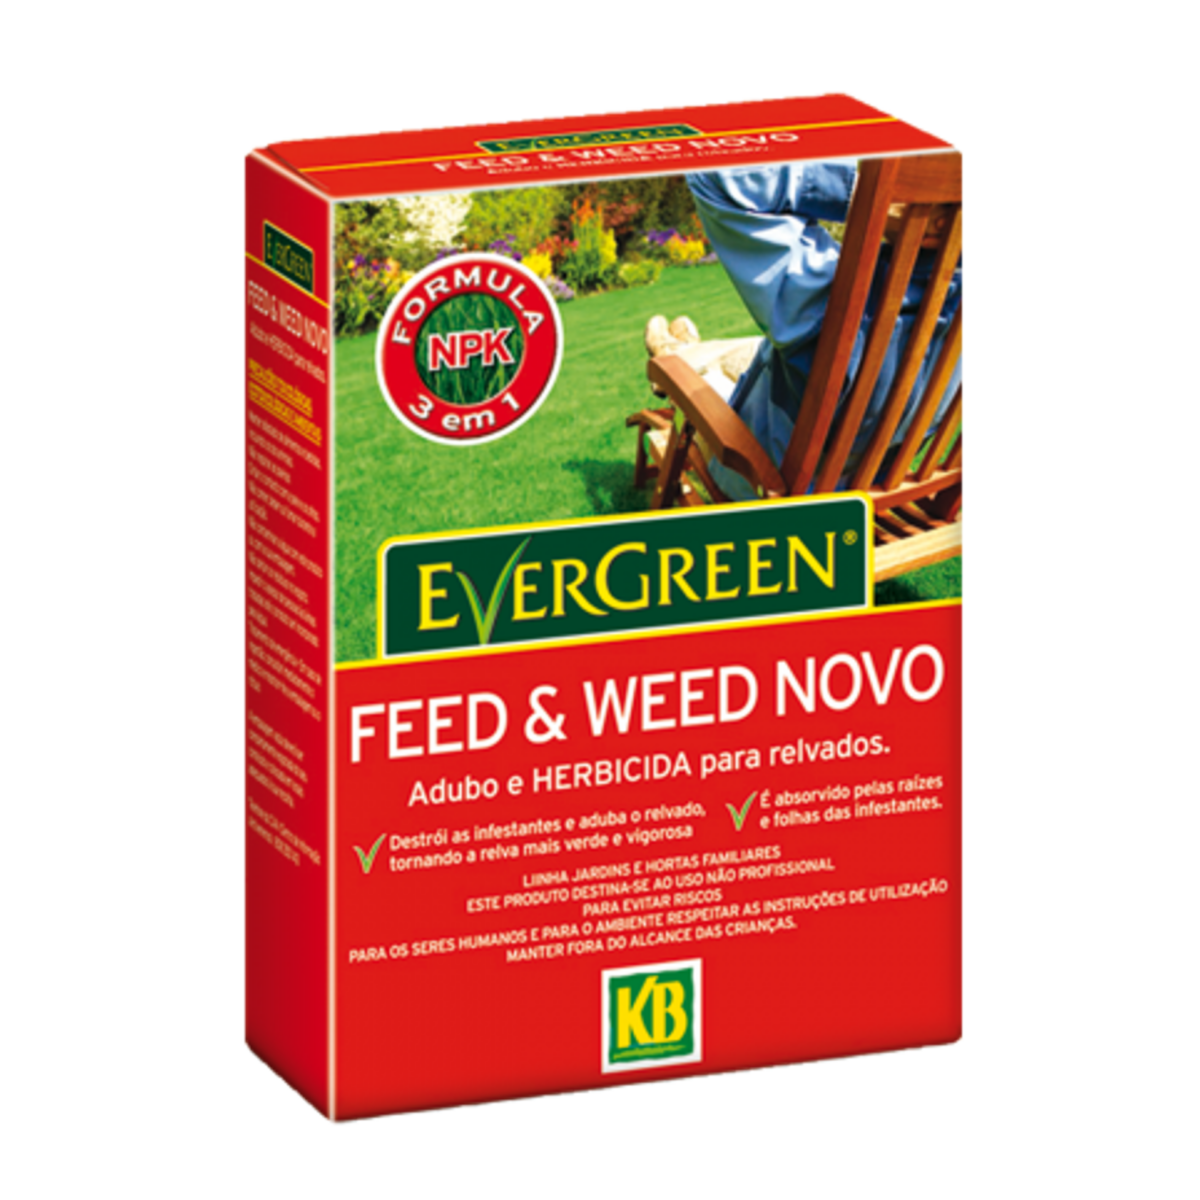 Adubo herbicida feed & weed para relvados - KB (Saco 2Kg)